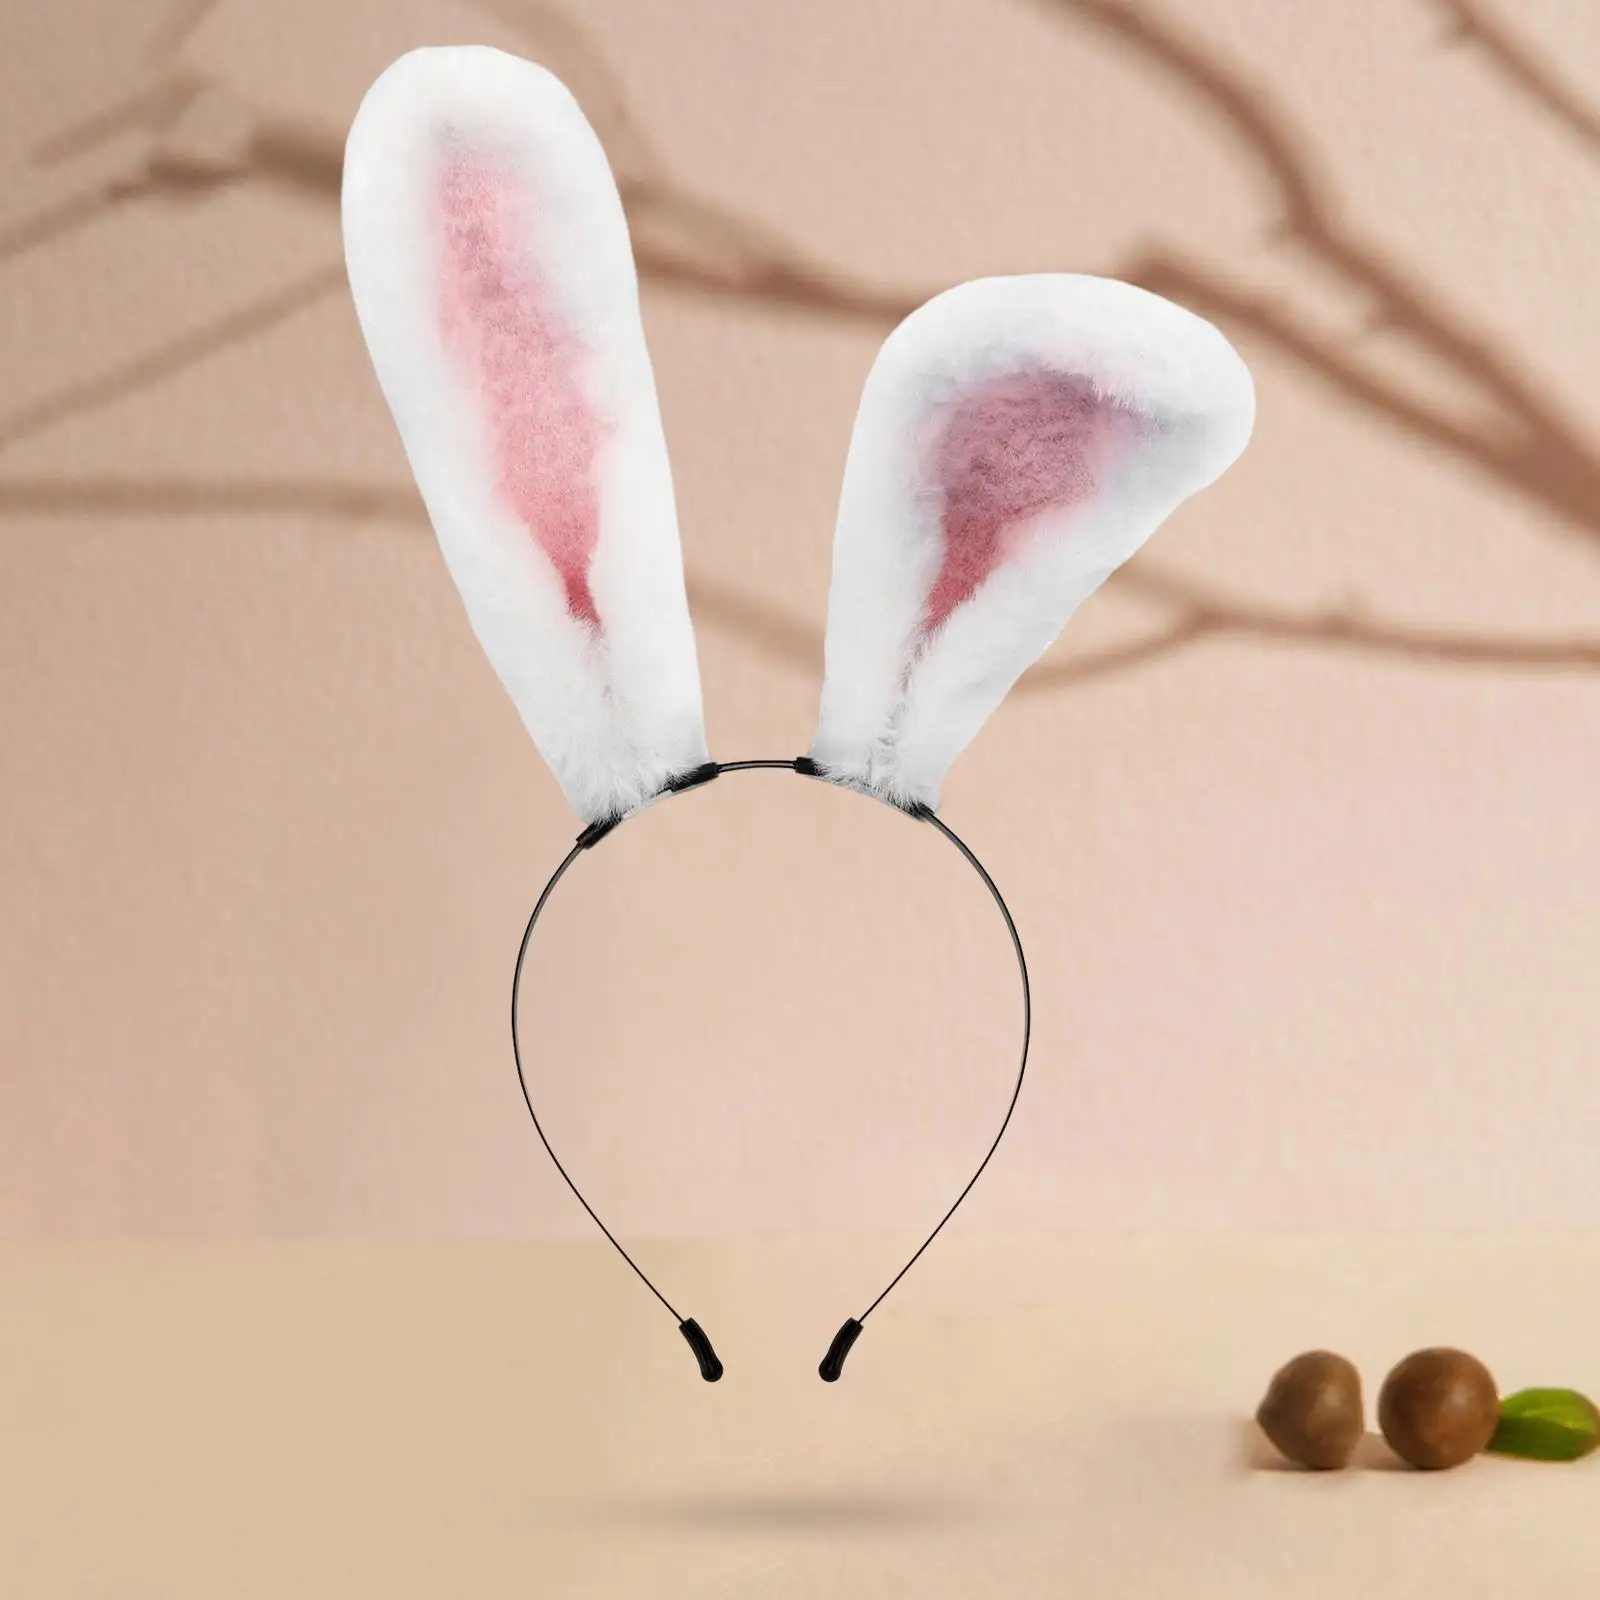 Bunny Ears Headband Headwear Animal Ears Hair Hoop Hair Styling Costume